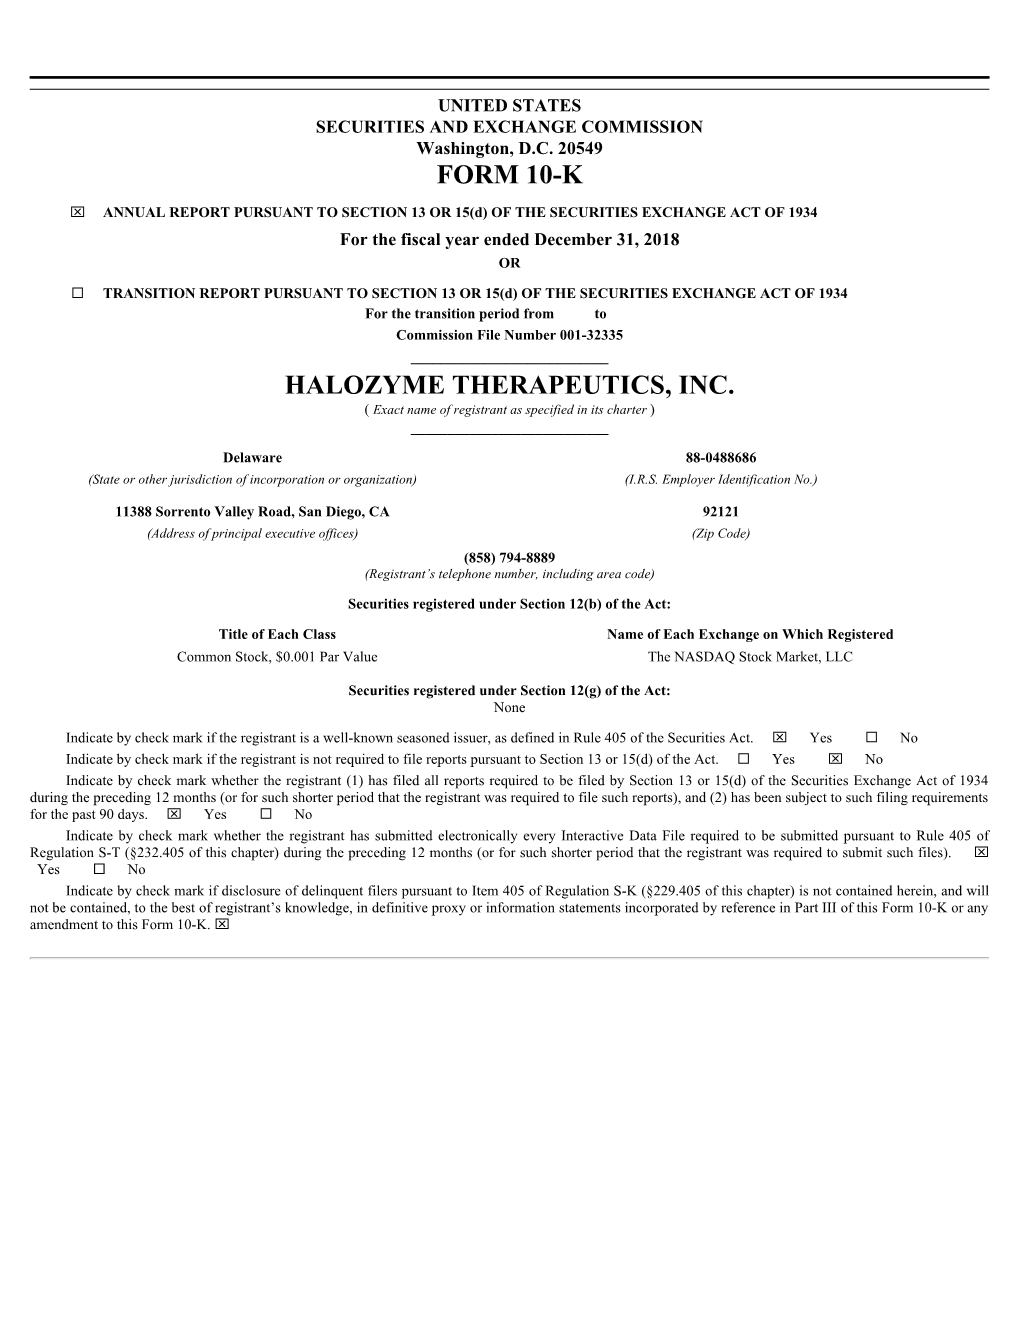 Form 10-K Halozyme Therapeutics, Inc